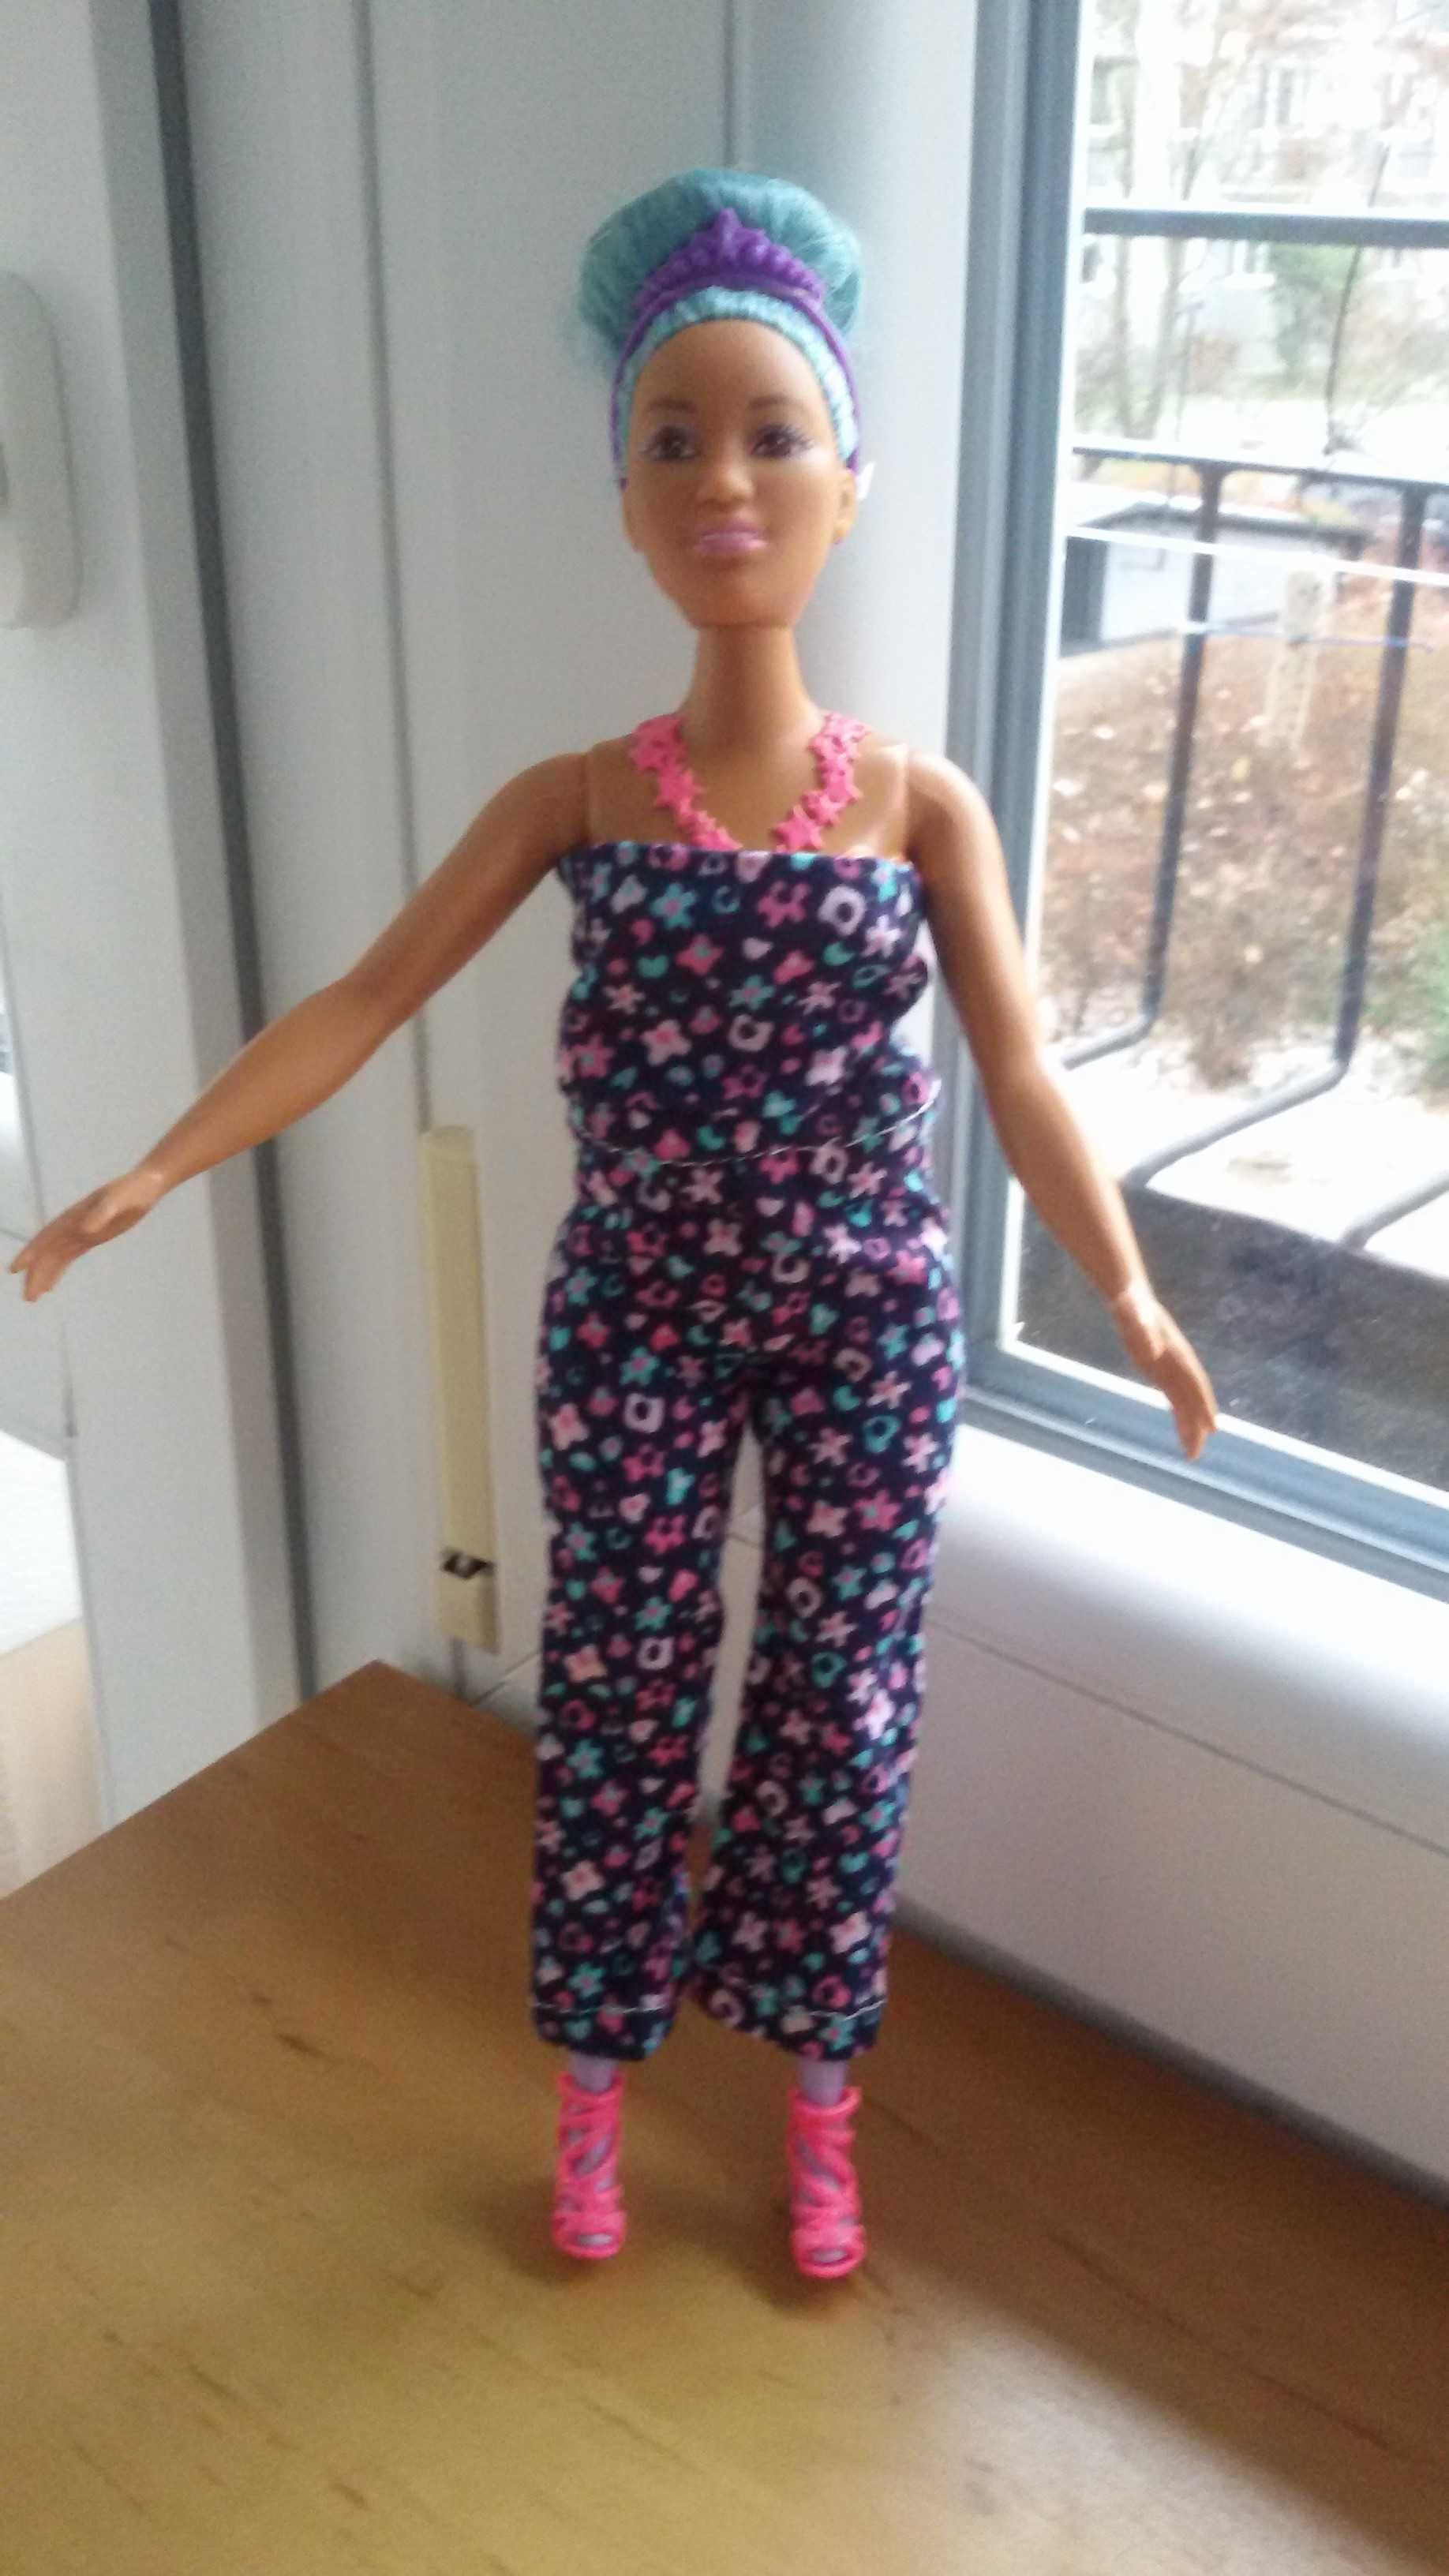 Lalka Barbie Dreamtopia, lalka Barbie wróżka 30 cm. + akcesoria